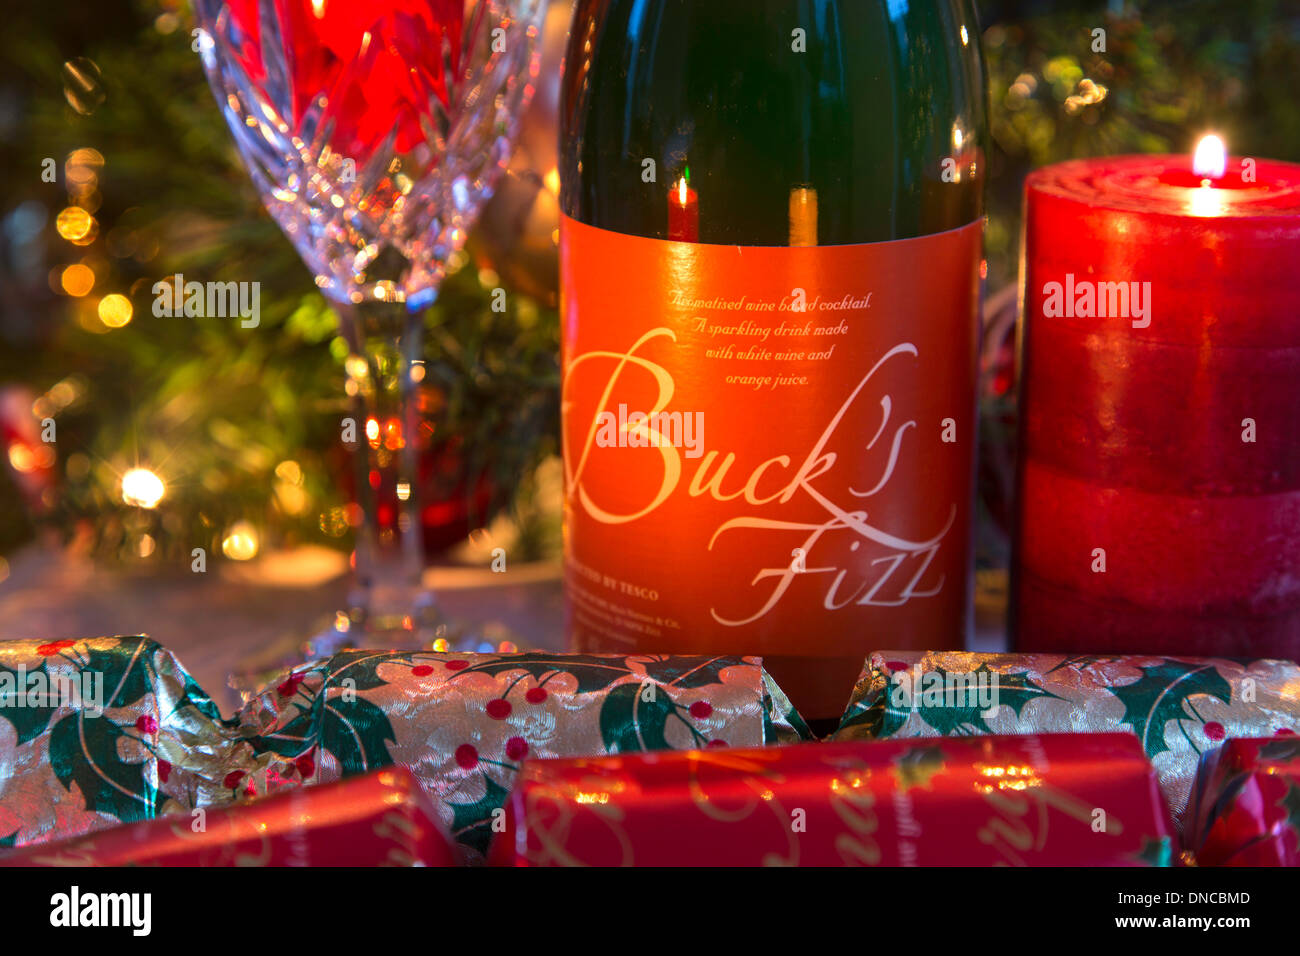 A bottle of Buck's Fizz on a festive table, England, UK Stock Photo